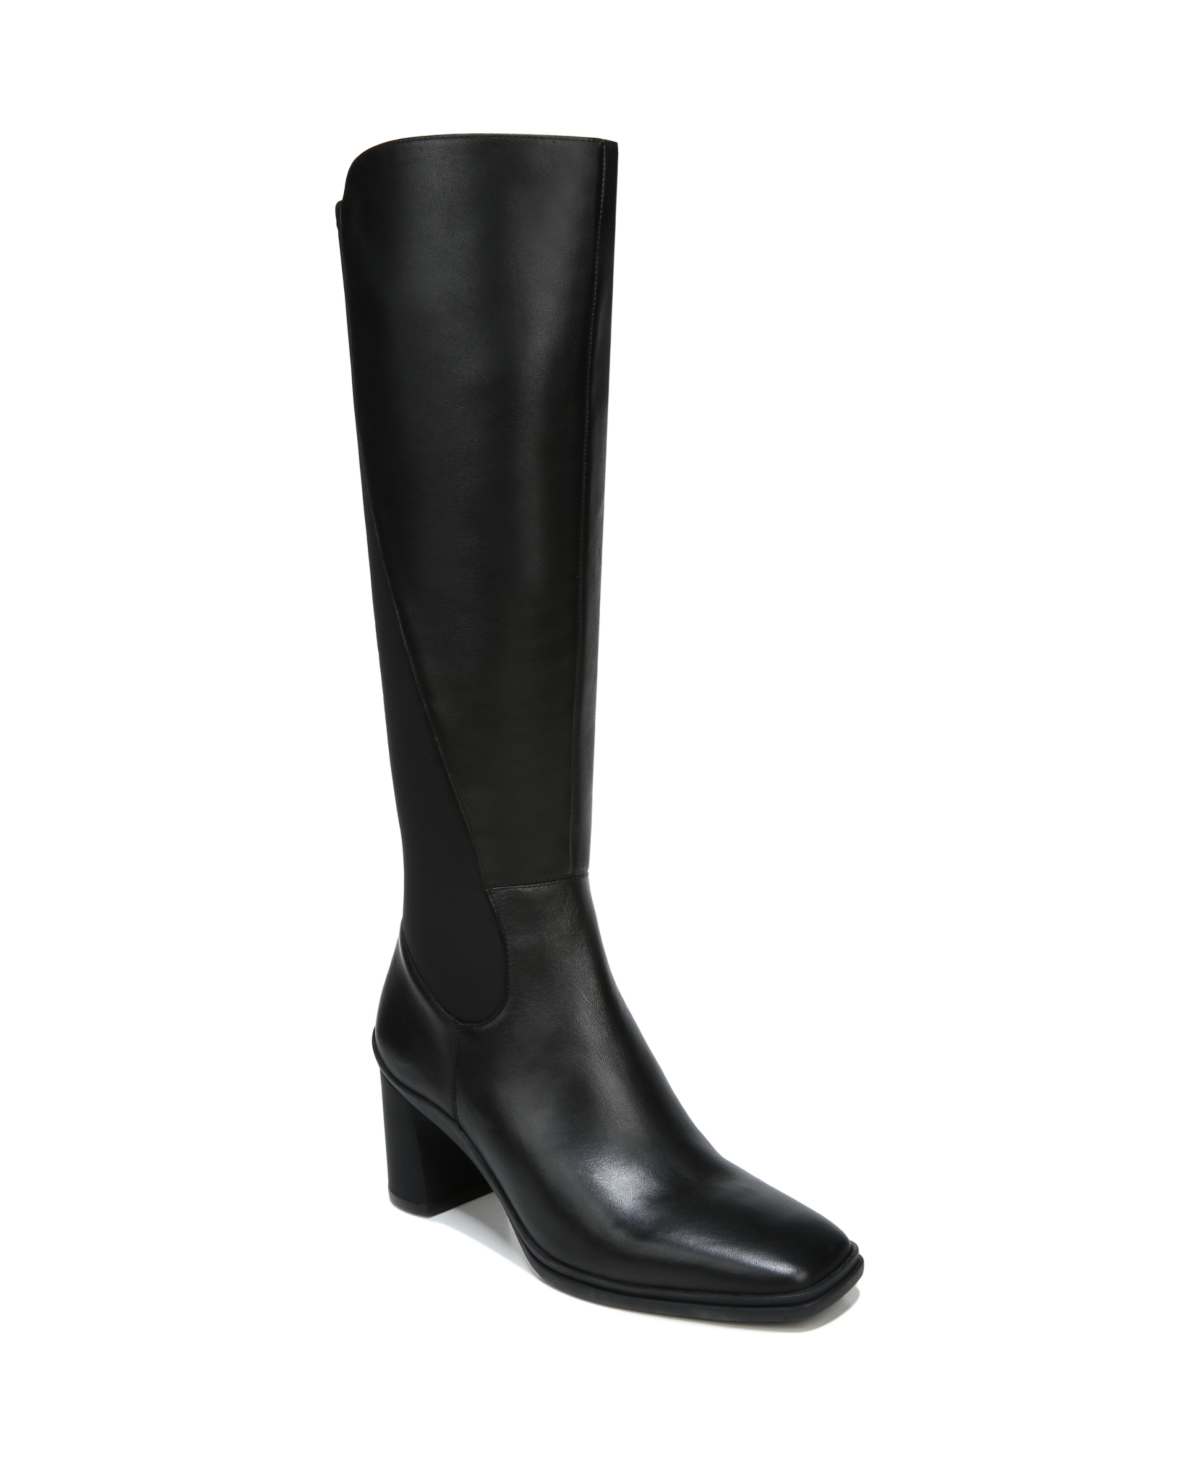 Axel 2 Waterproof High Shaft Boots - Oxford Brown Waterproof Leather